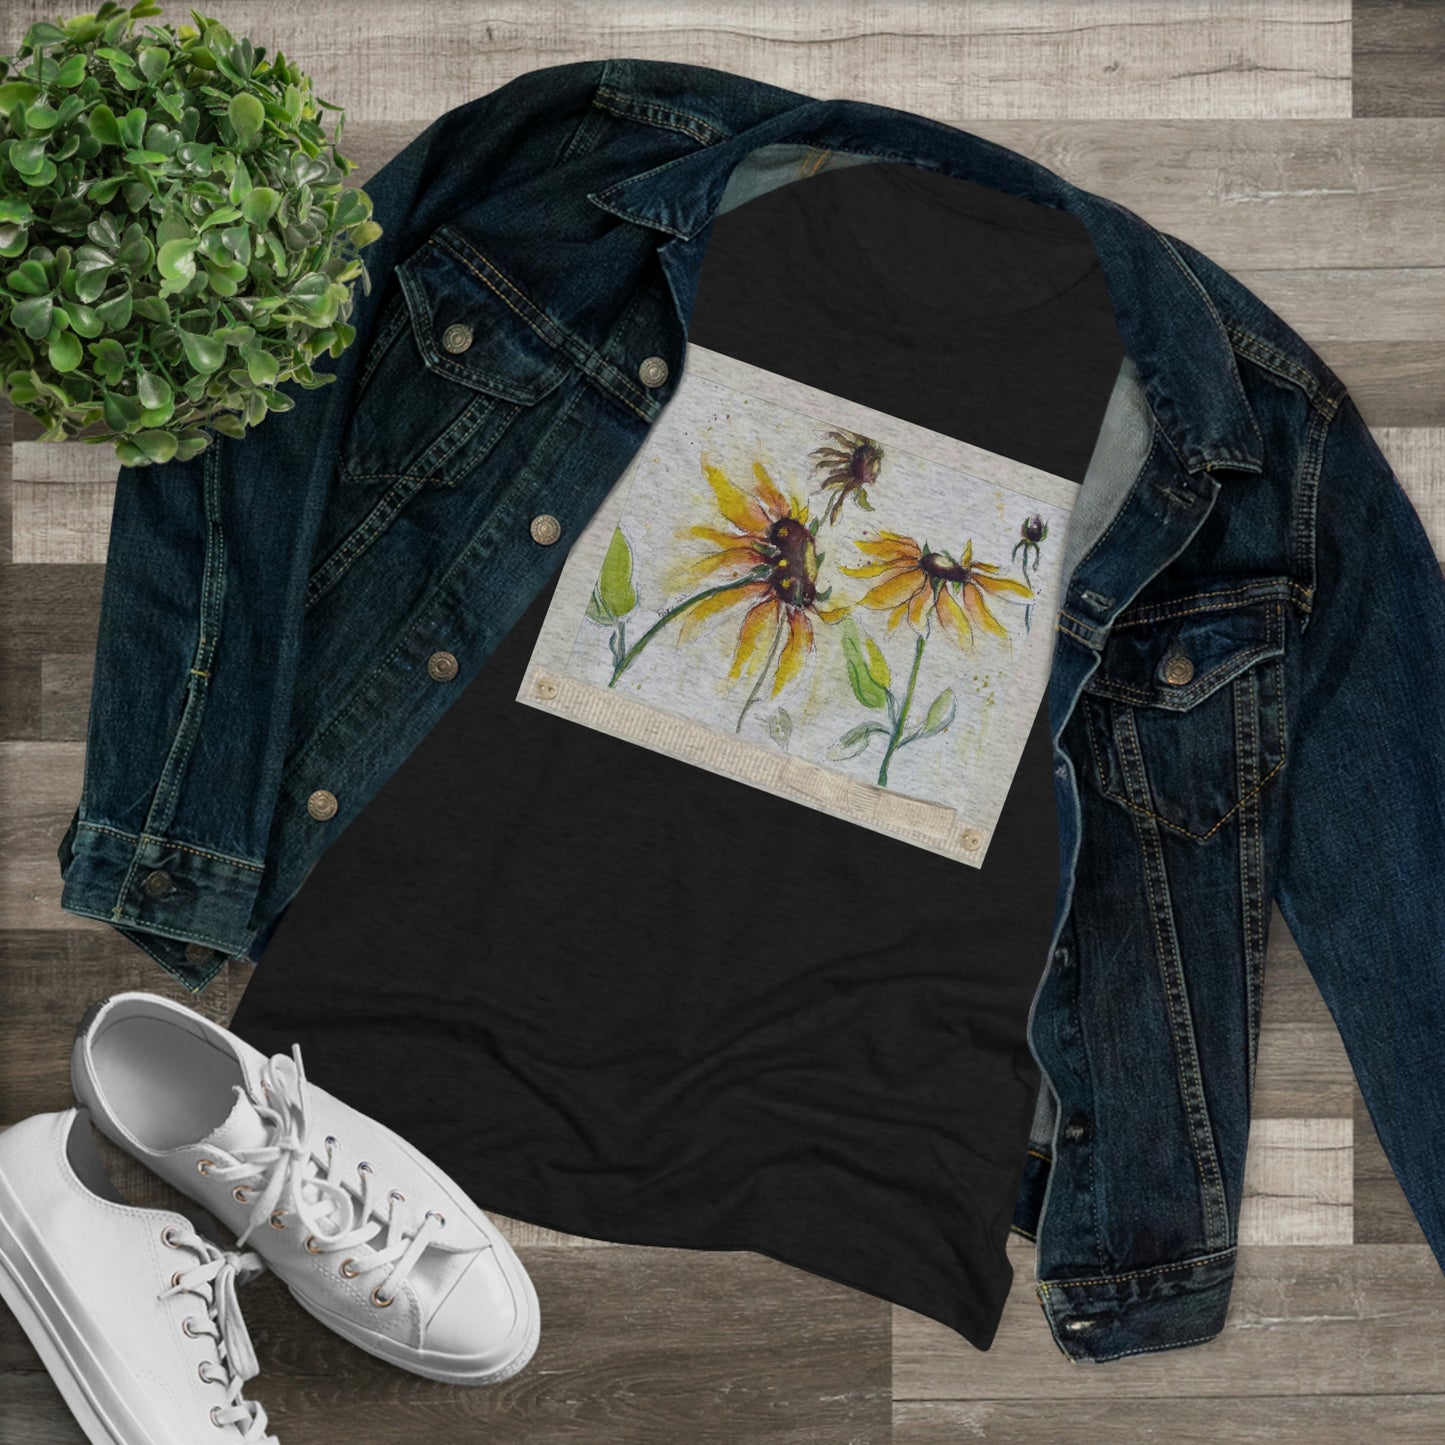 Autumn Sunflowers Women's fitted Triblend Tee  tee shirt